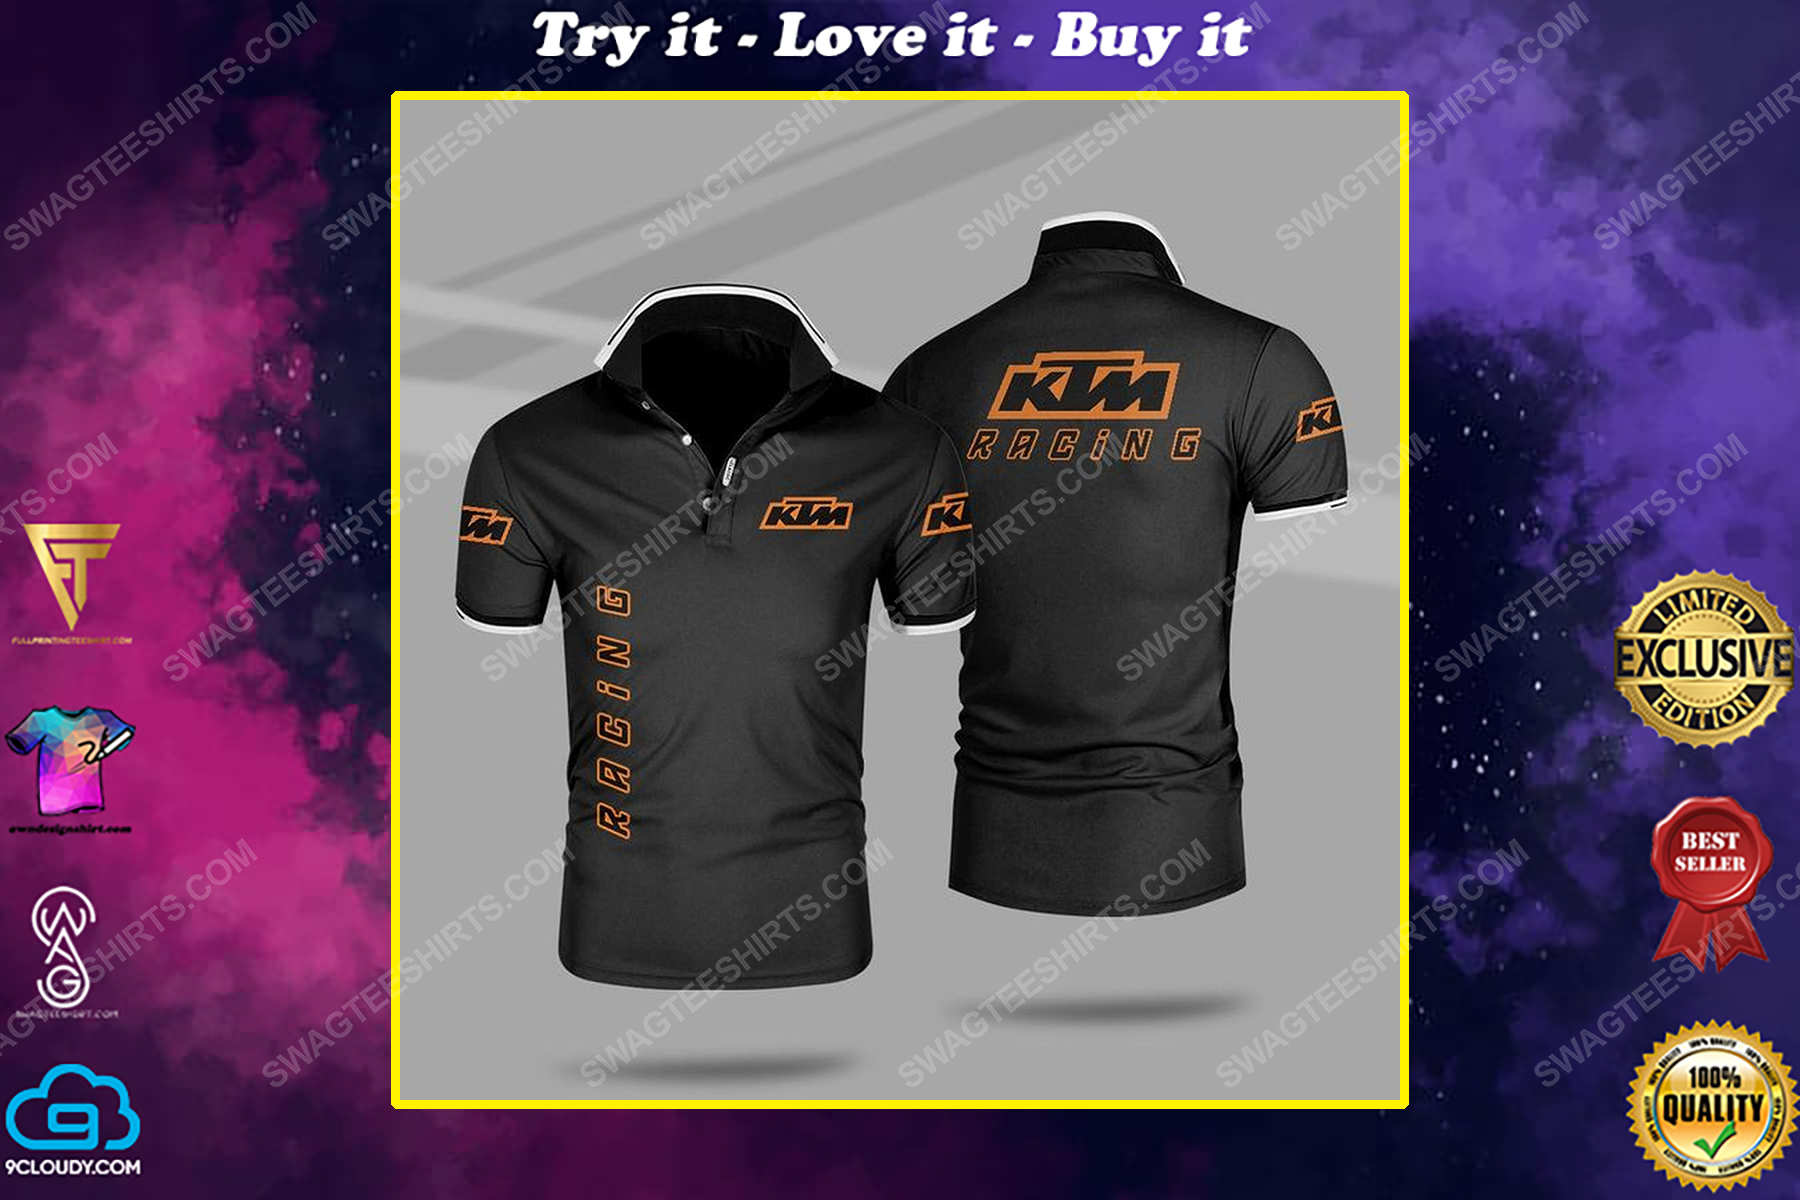 The ktm motorcycle racing all over print polo shirt